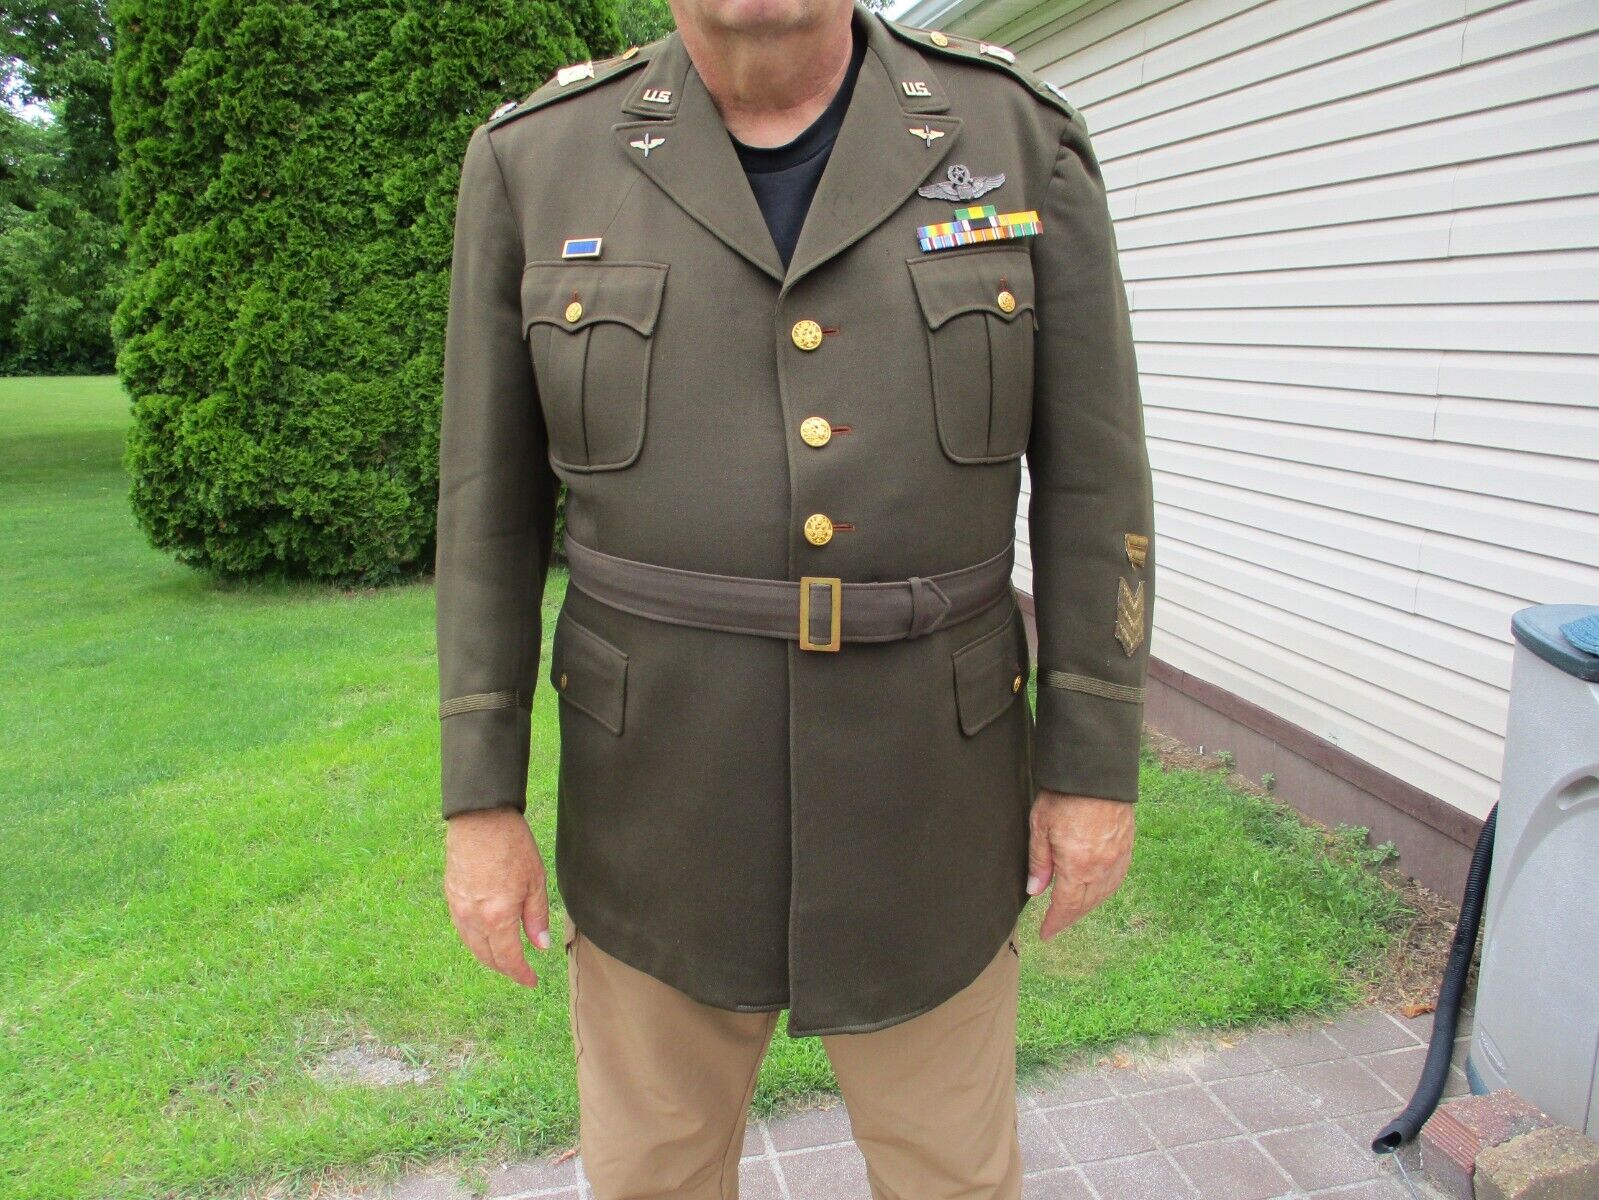 WW2 officers jacket ,48L,to pinks,greens 18th FG,7th AF,original item reenacting